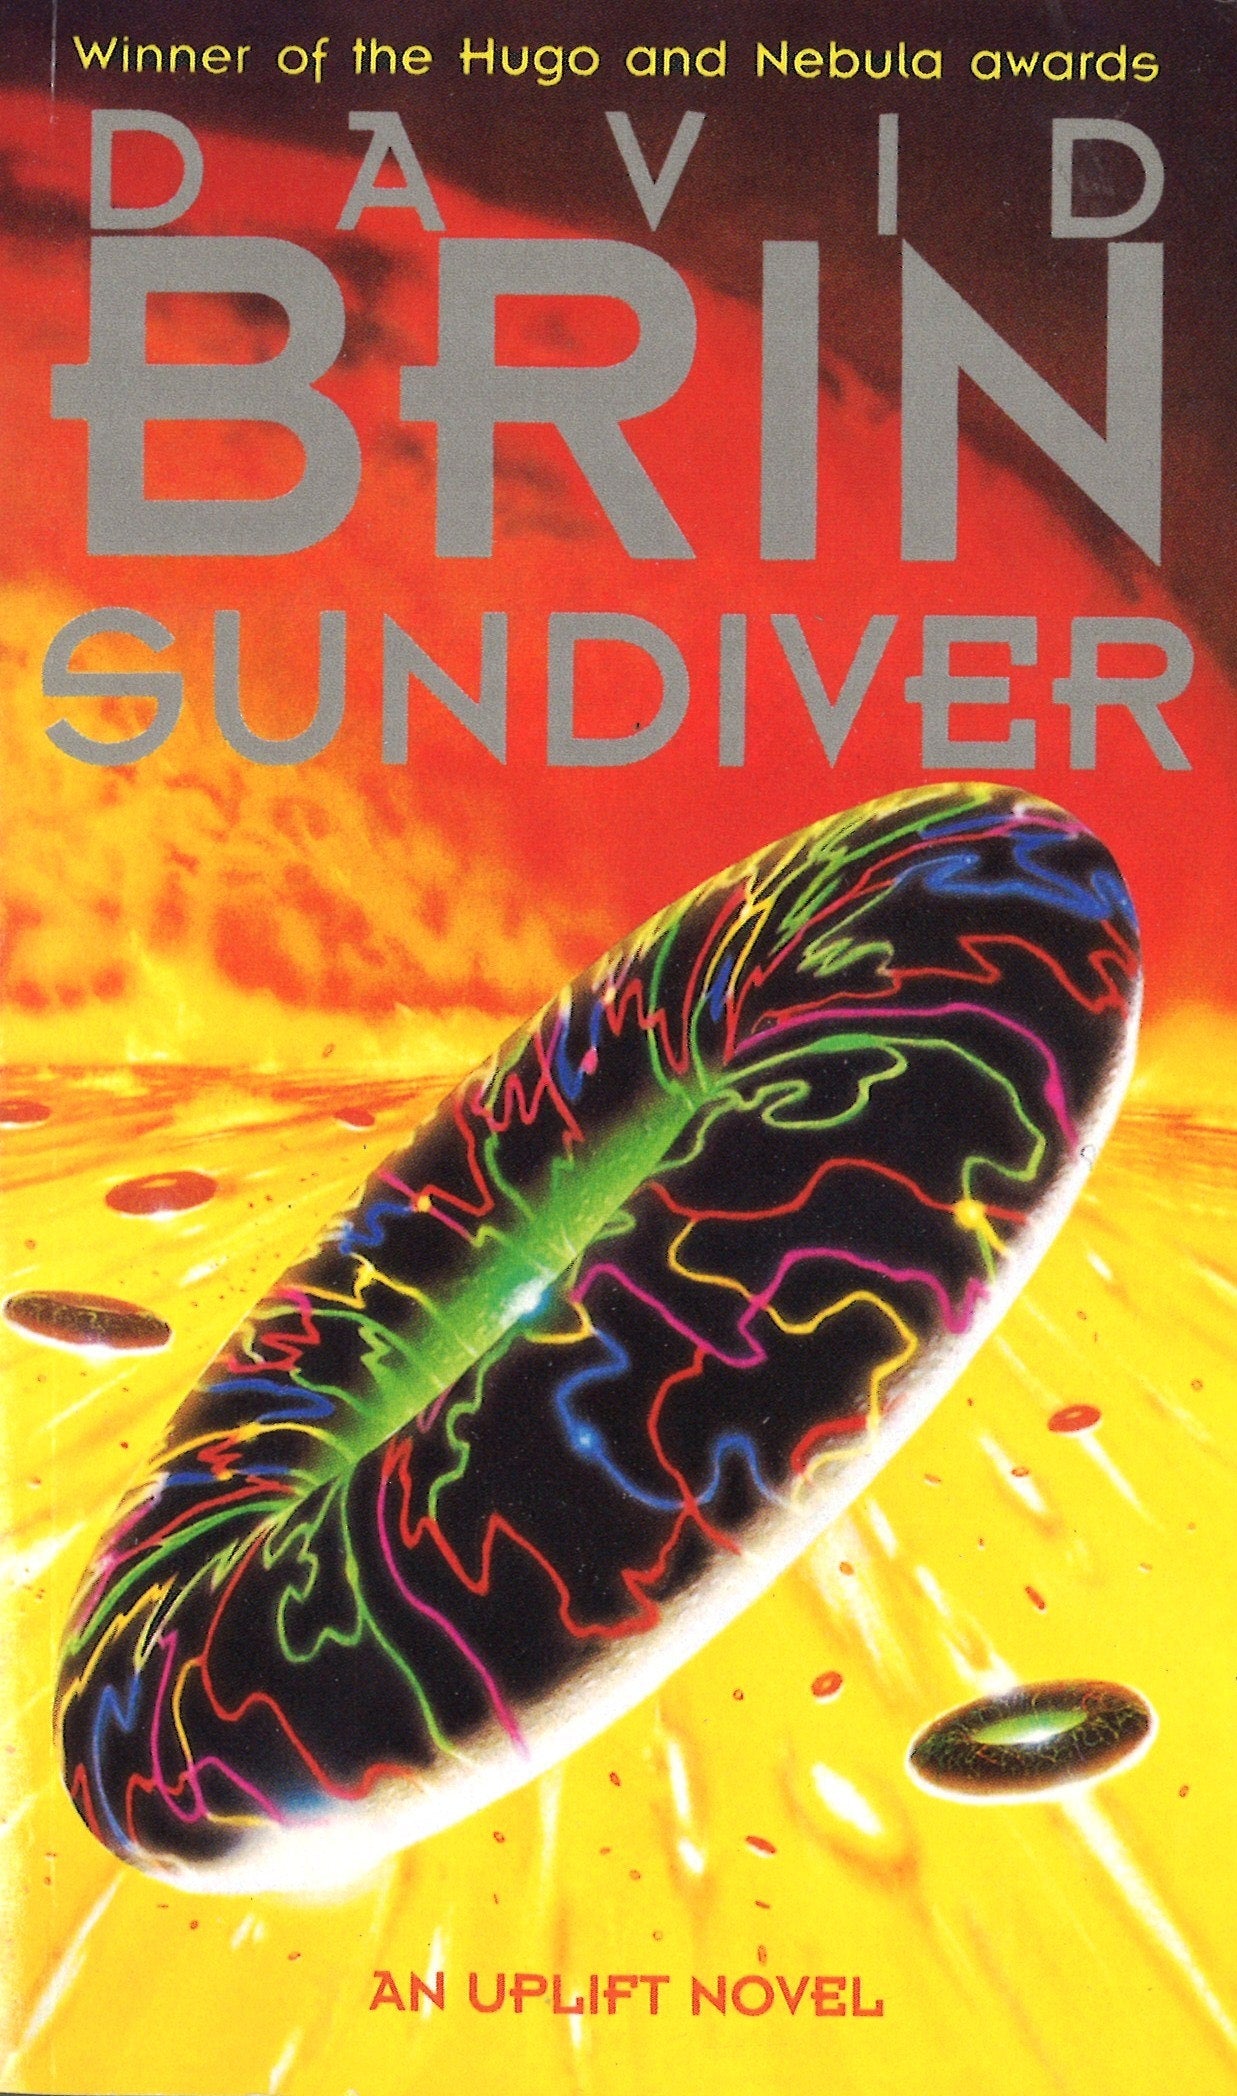 Sundiver by David Brin